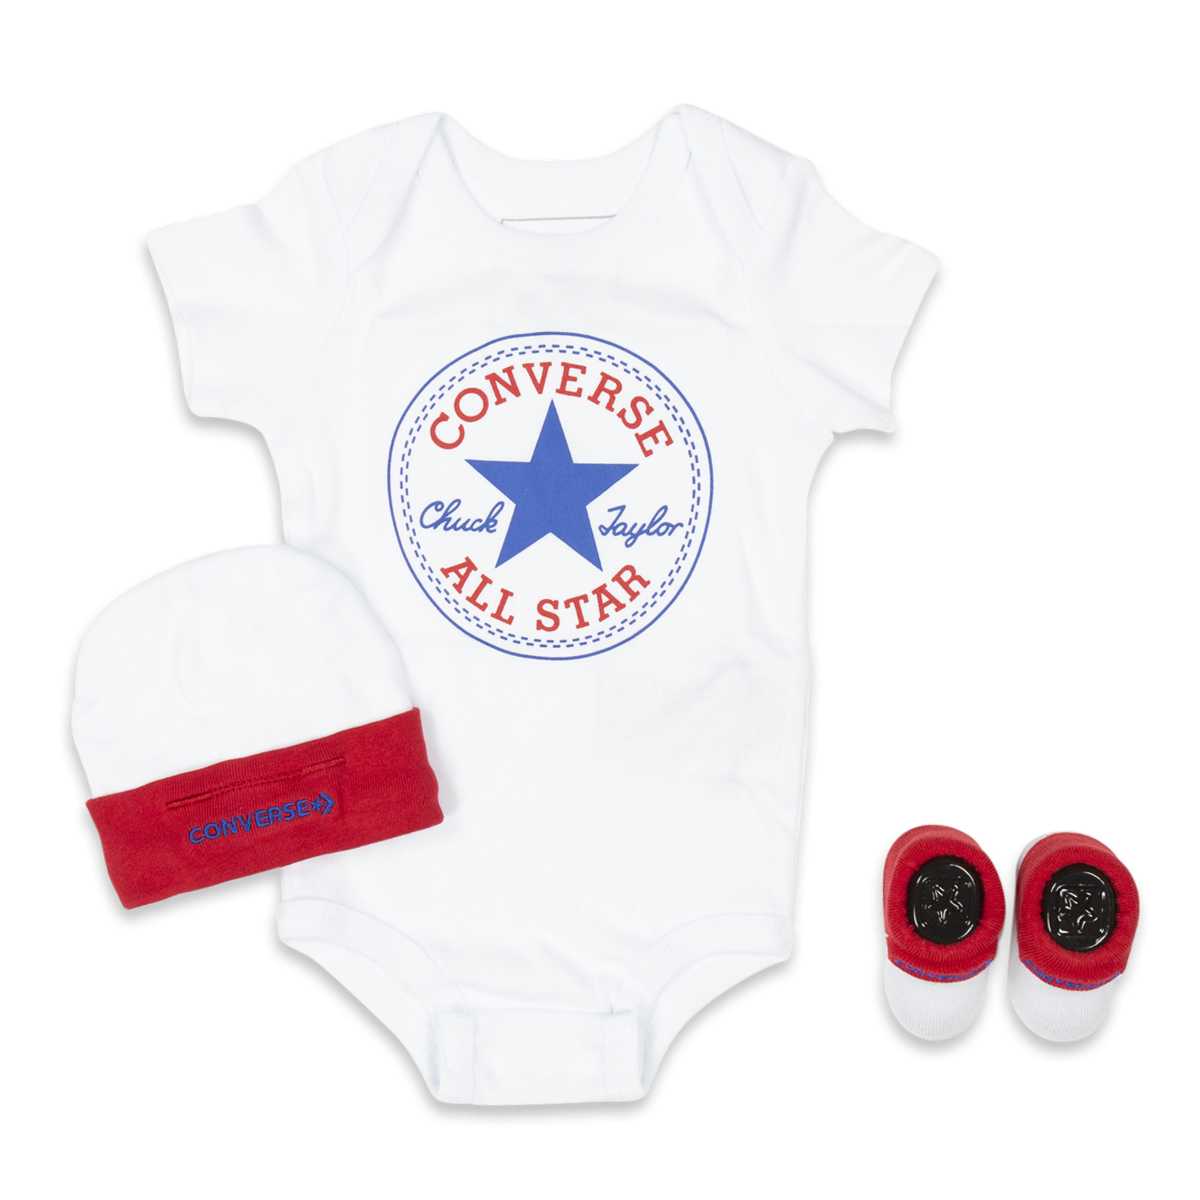 converse newborn baby clothes